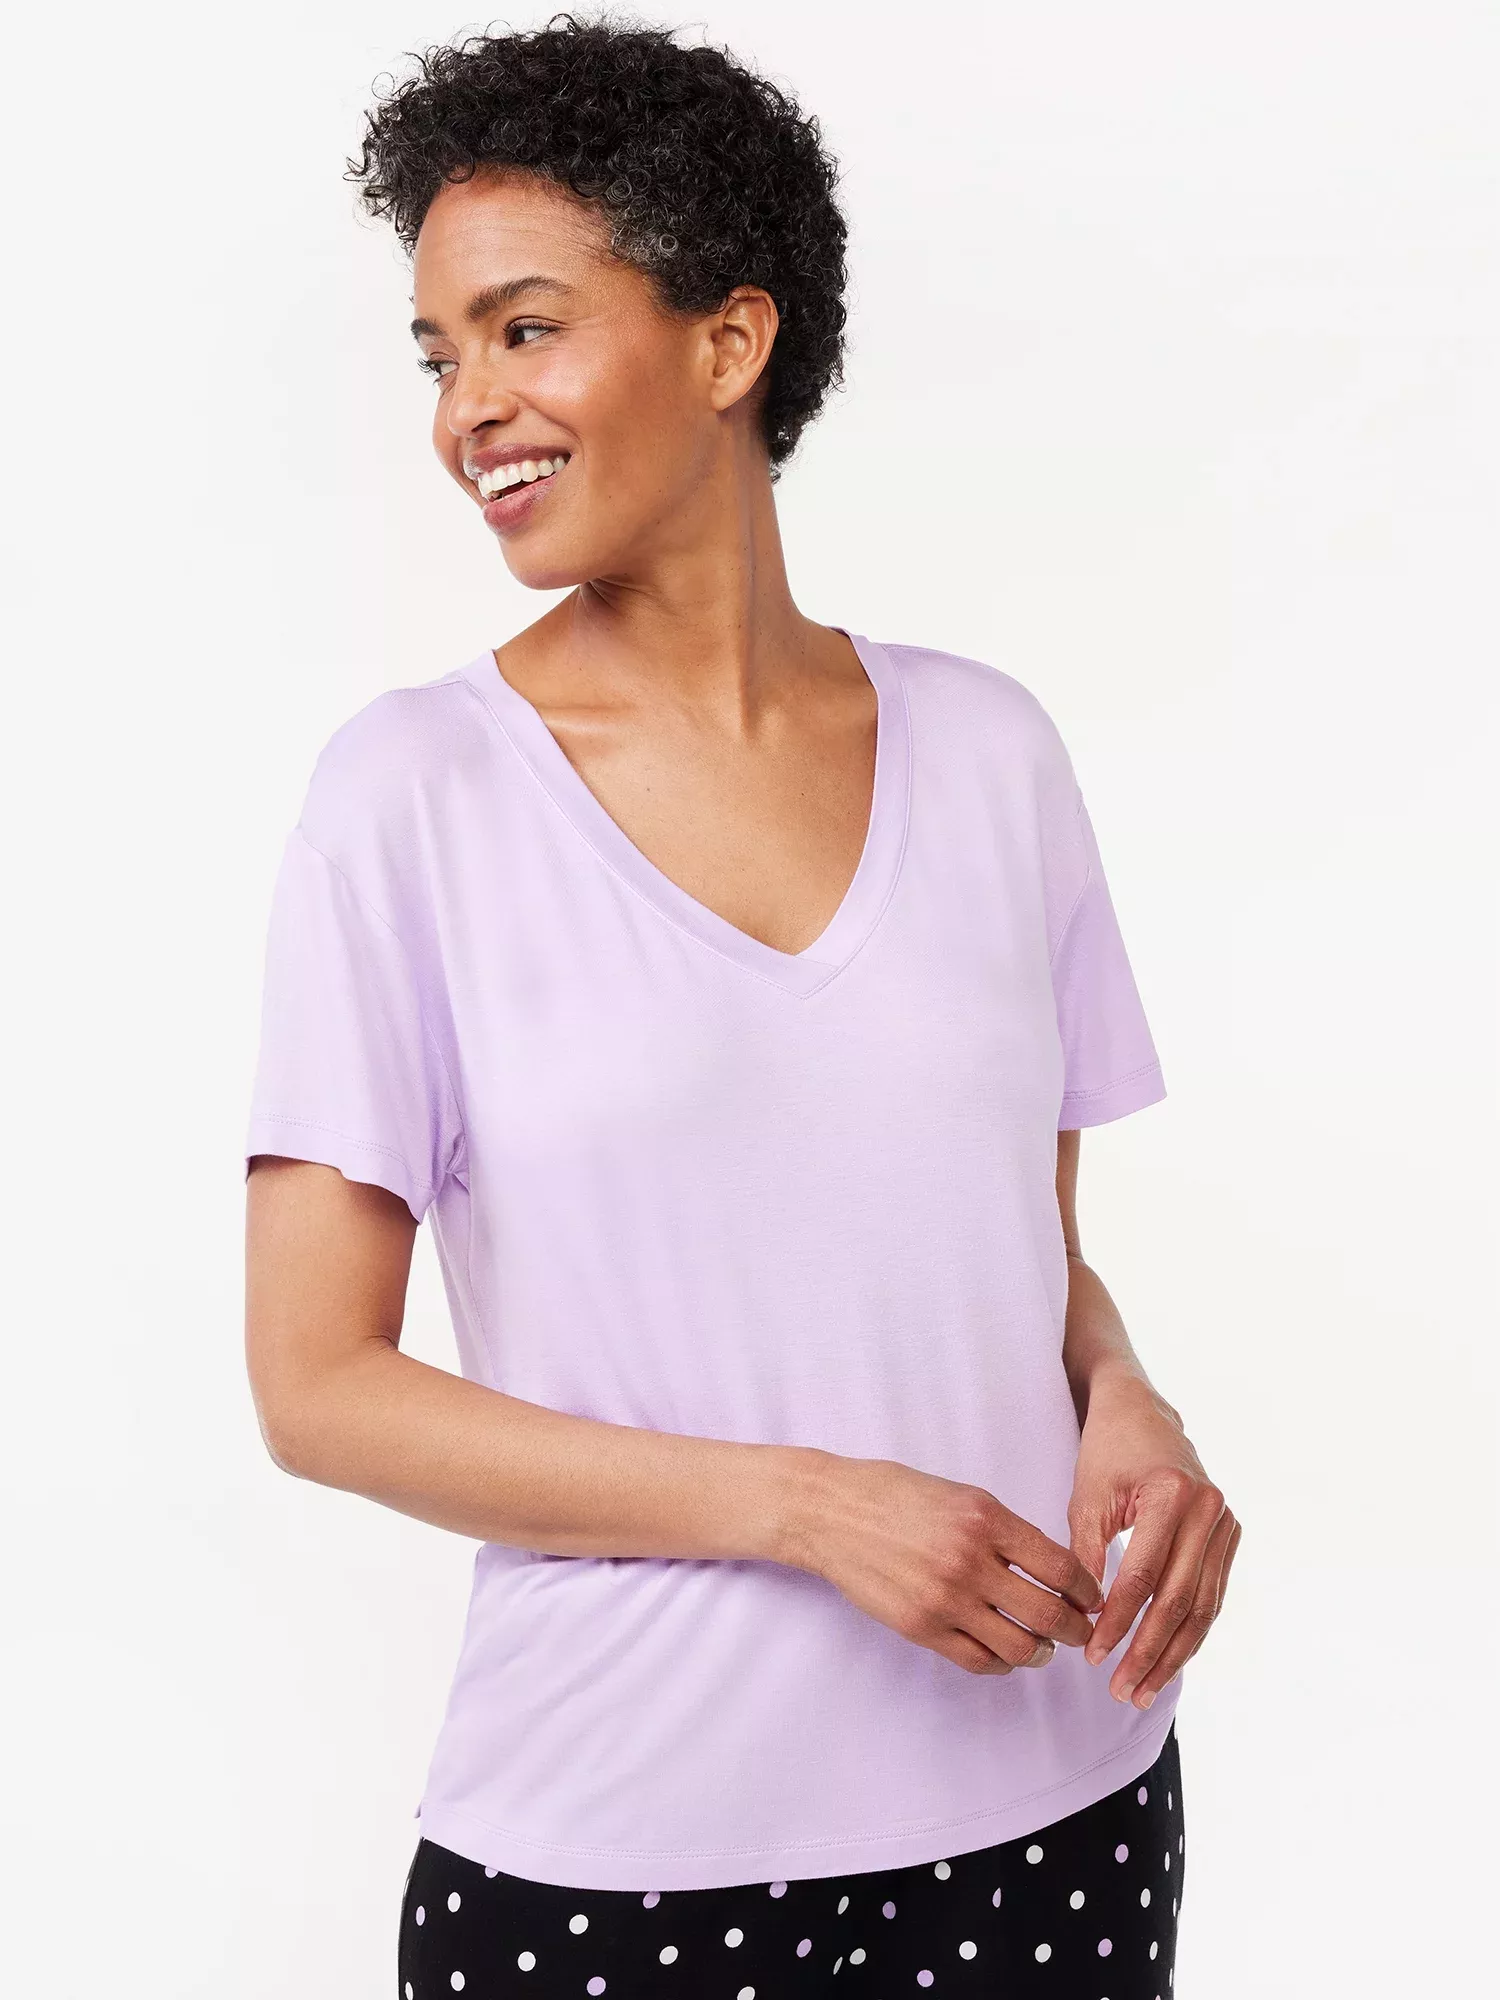 Joyspun Women's Woven Notch Collar Pajama Top, Sizes S to 3X 